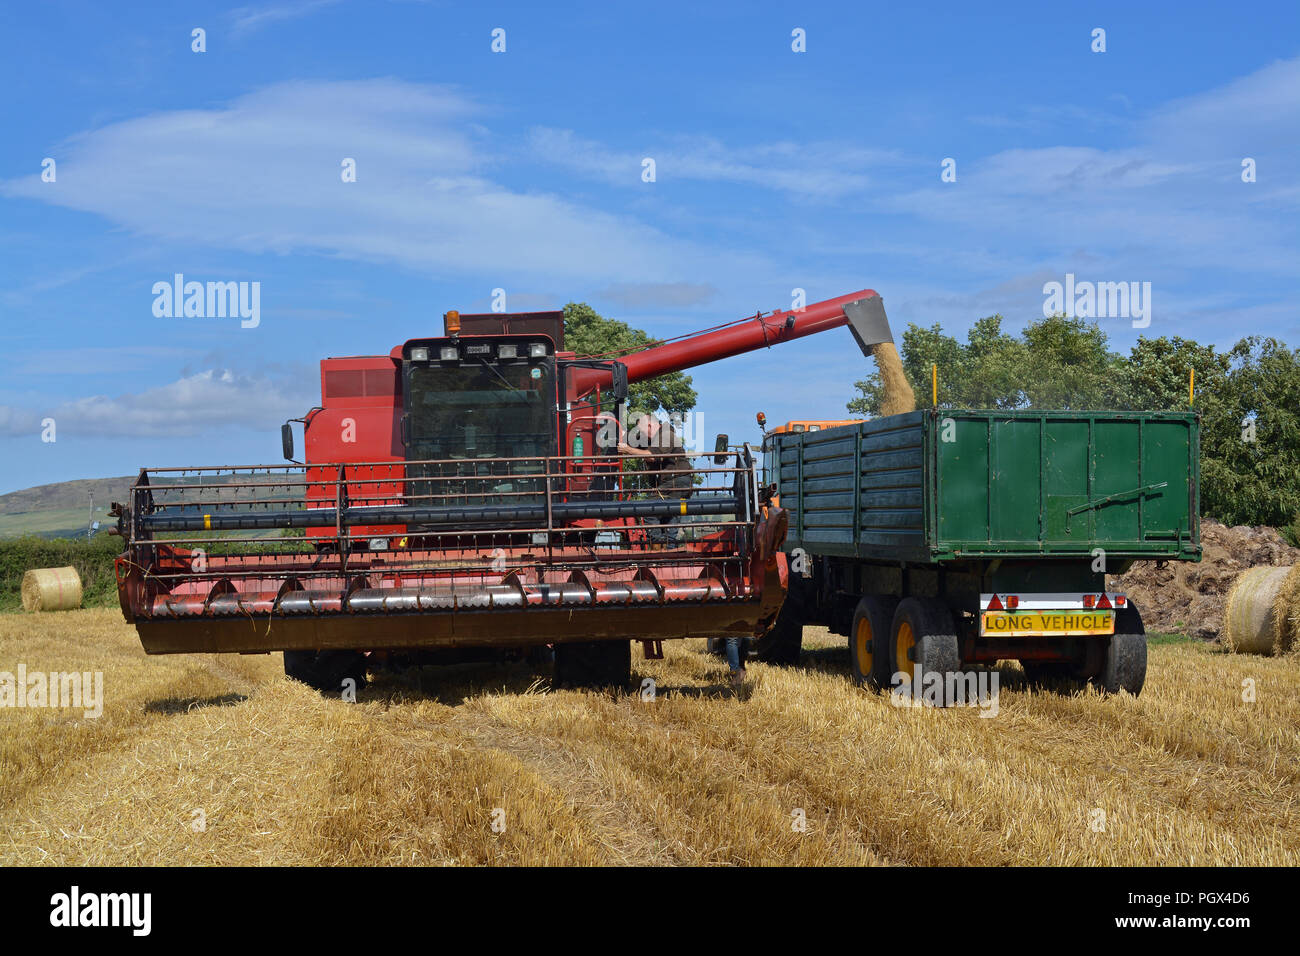 Case International 1660 Combine Harvester Stock Photo